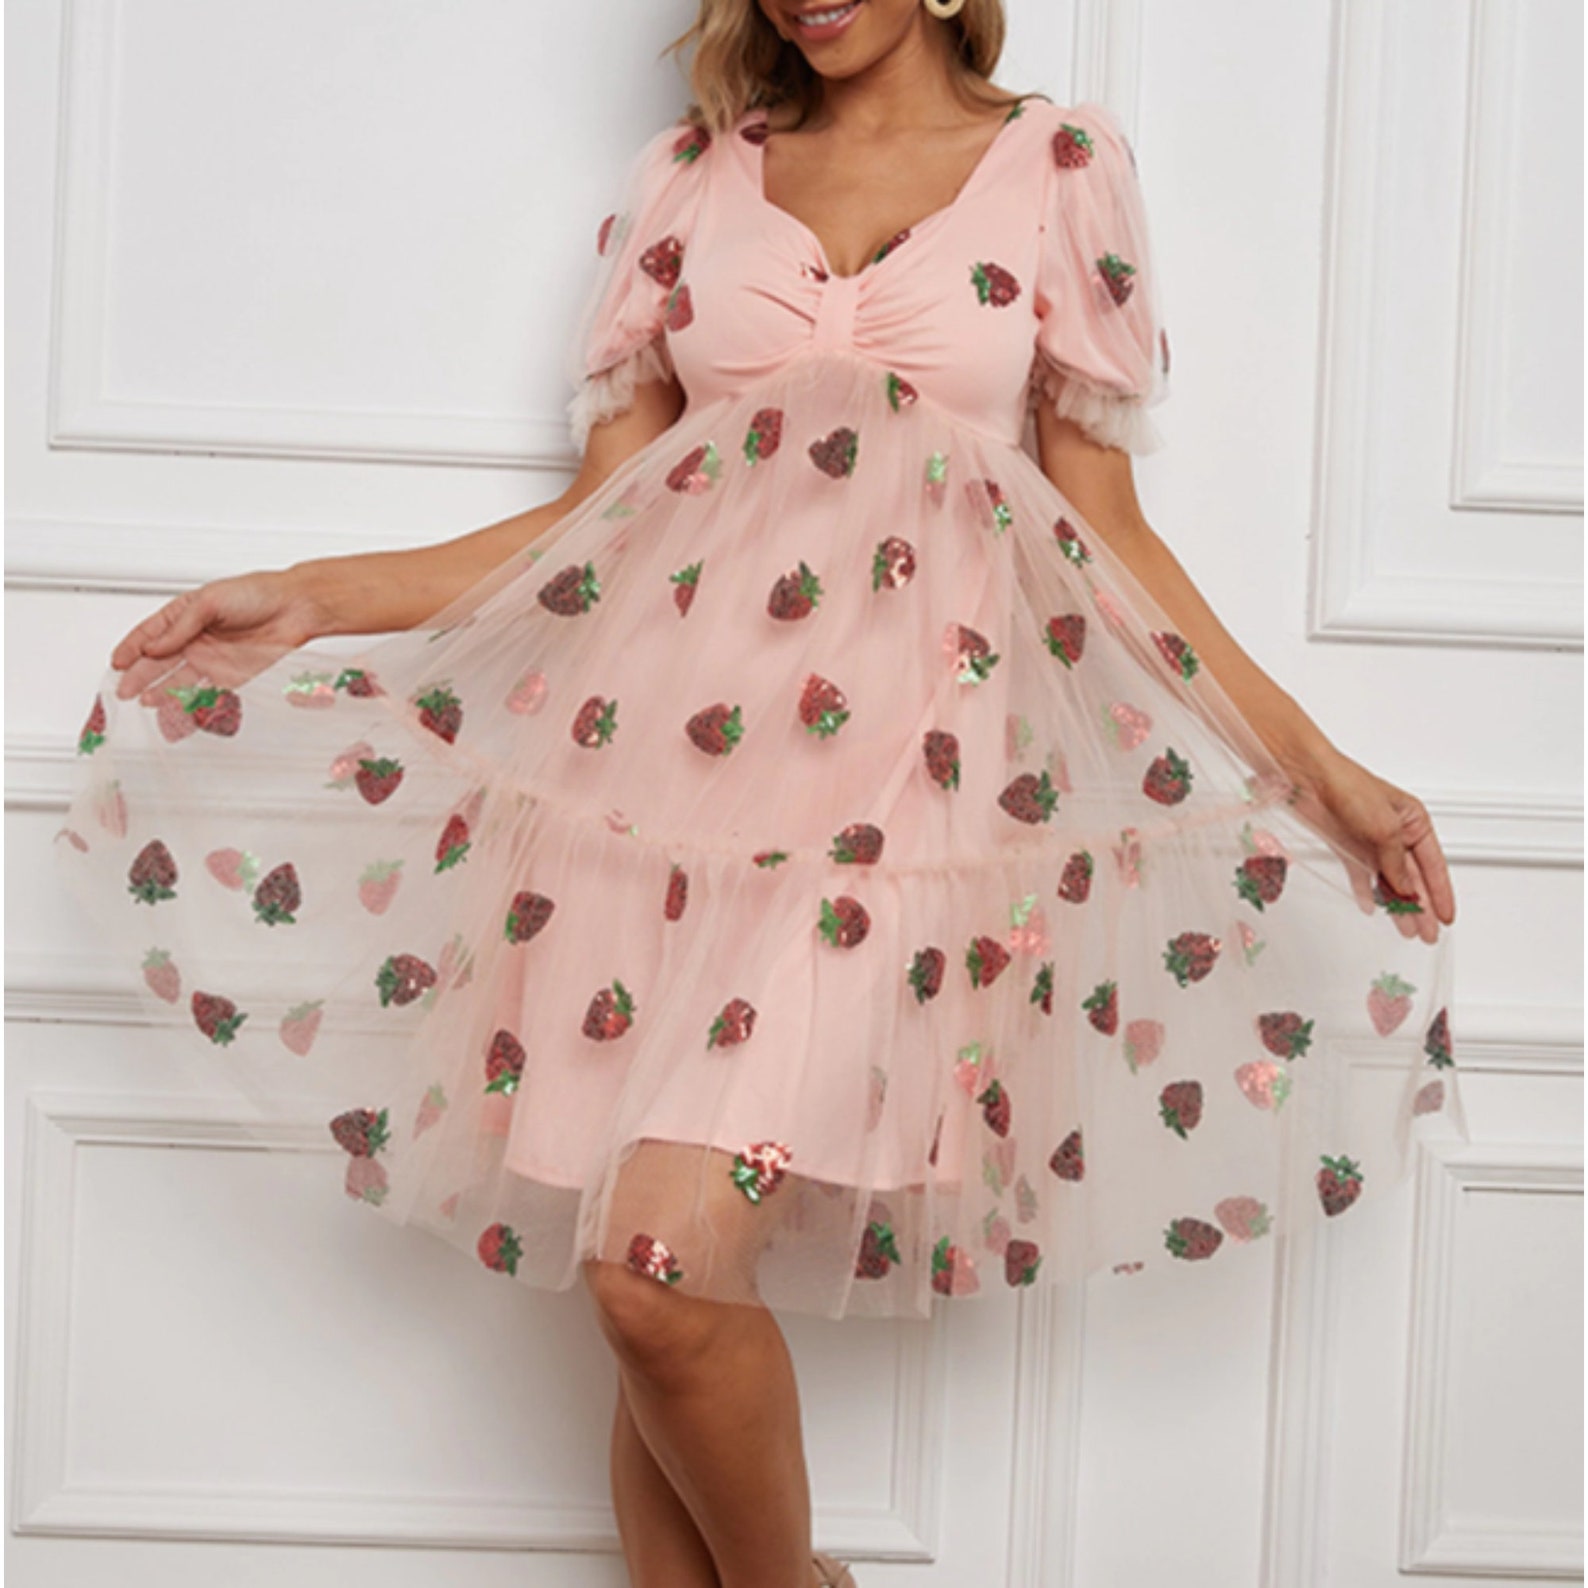 Strawberry dress Strawberry Mesh Dress peach dress | Etsy